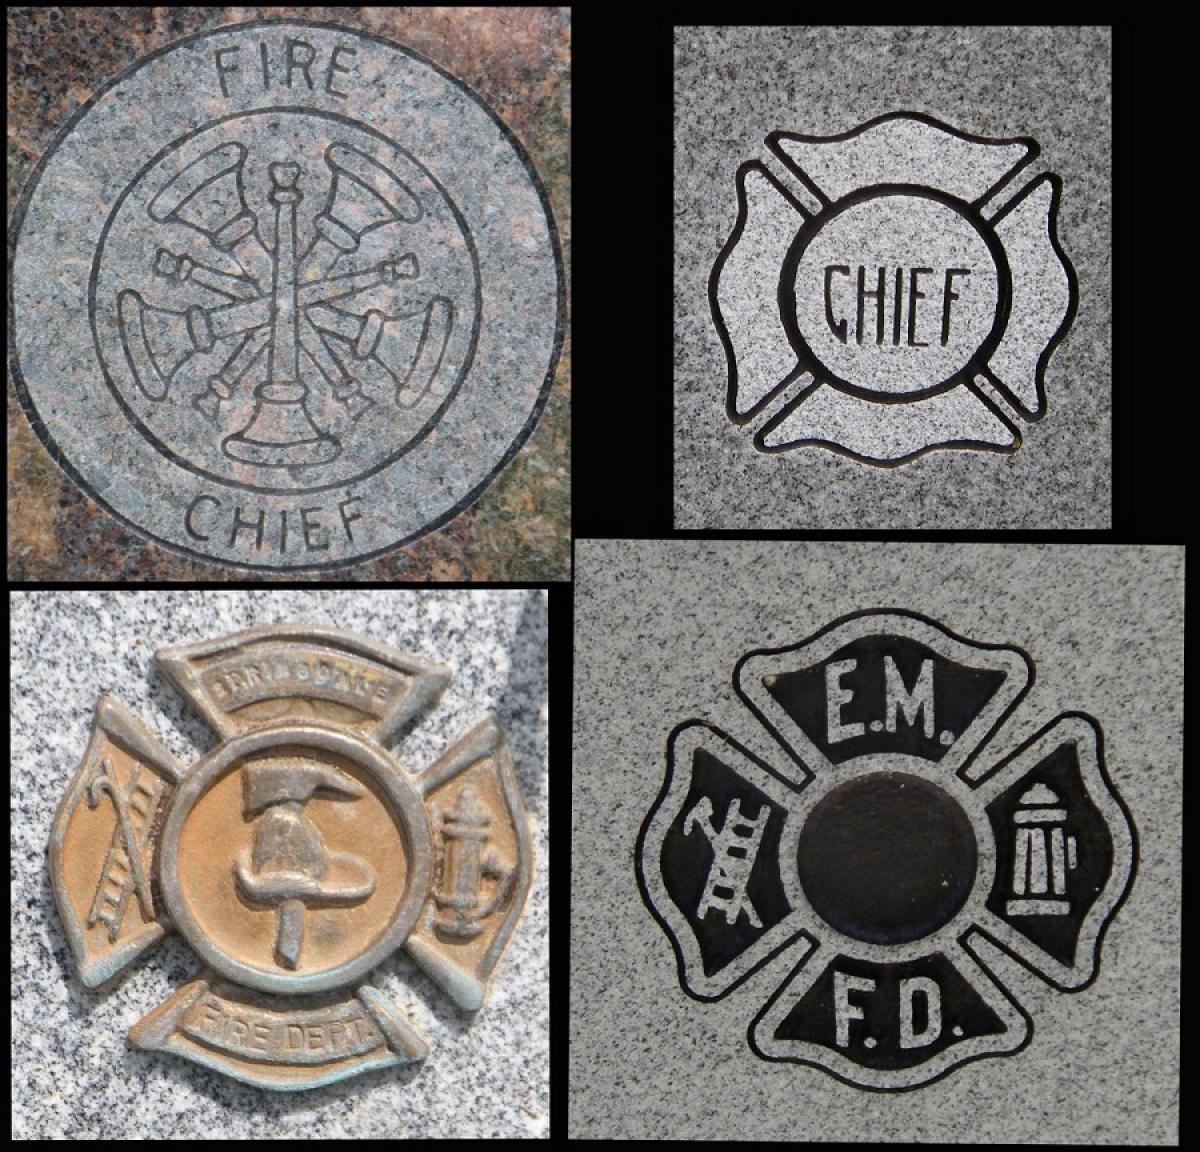 OK, Grove, Headstone Symbols and Meanings, Maltese Cross w/Firefighter Equipment